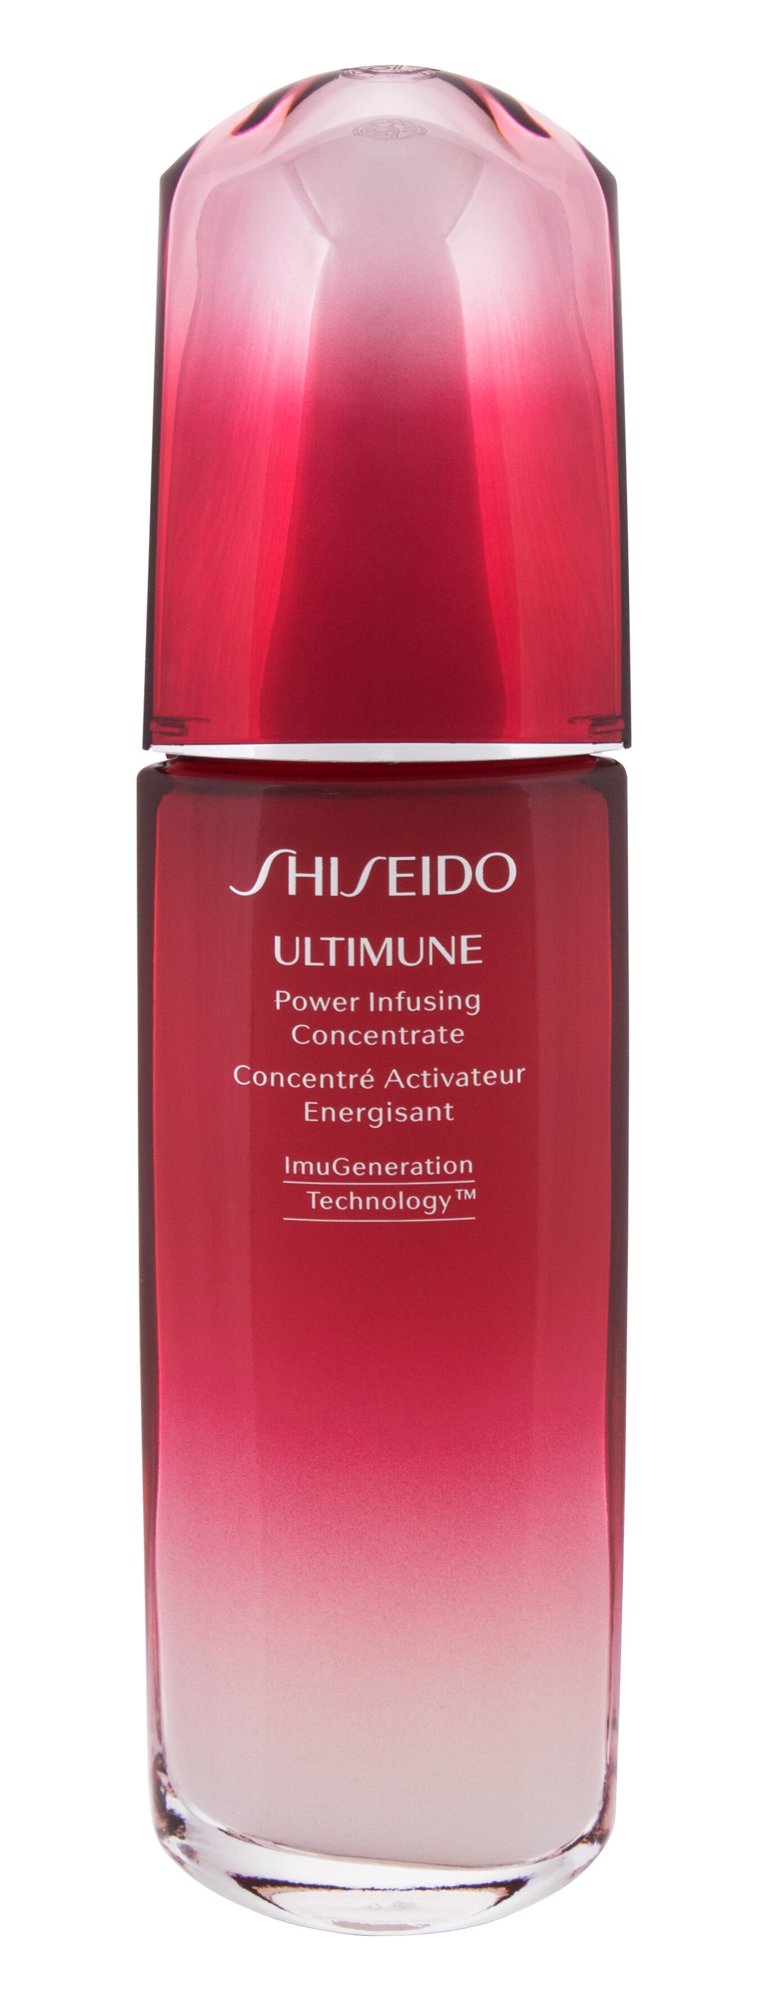 Shiseido Ultimune 100ml Veido serumas